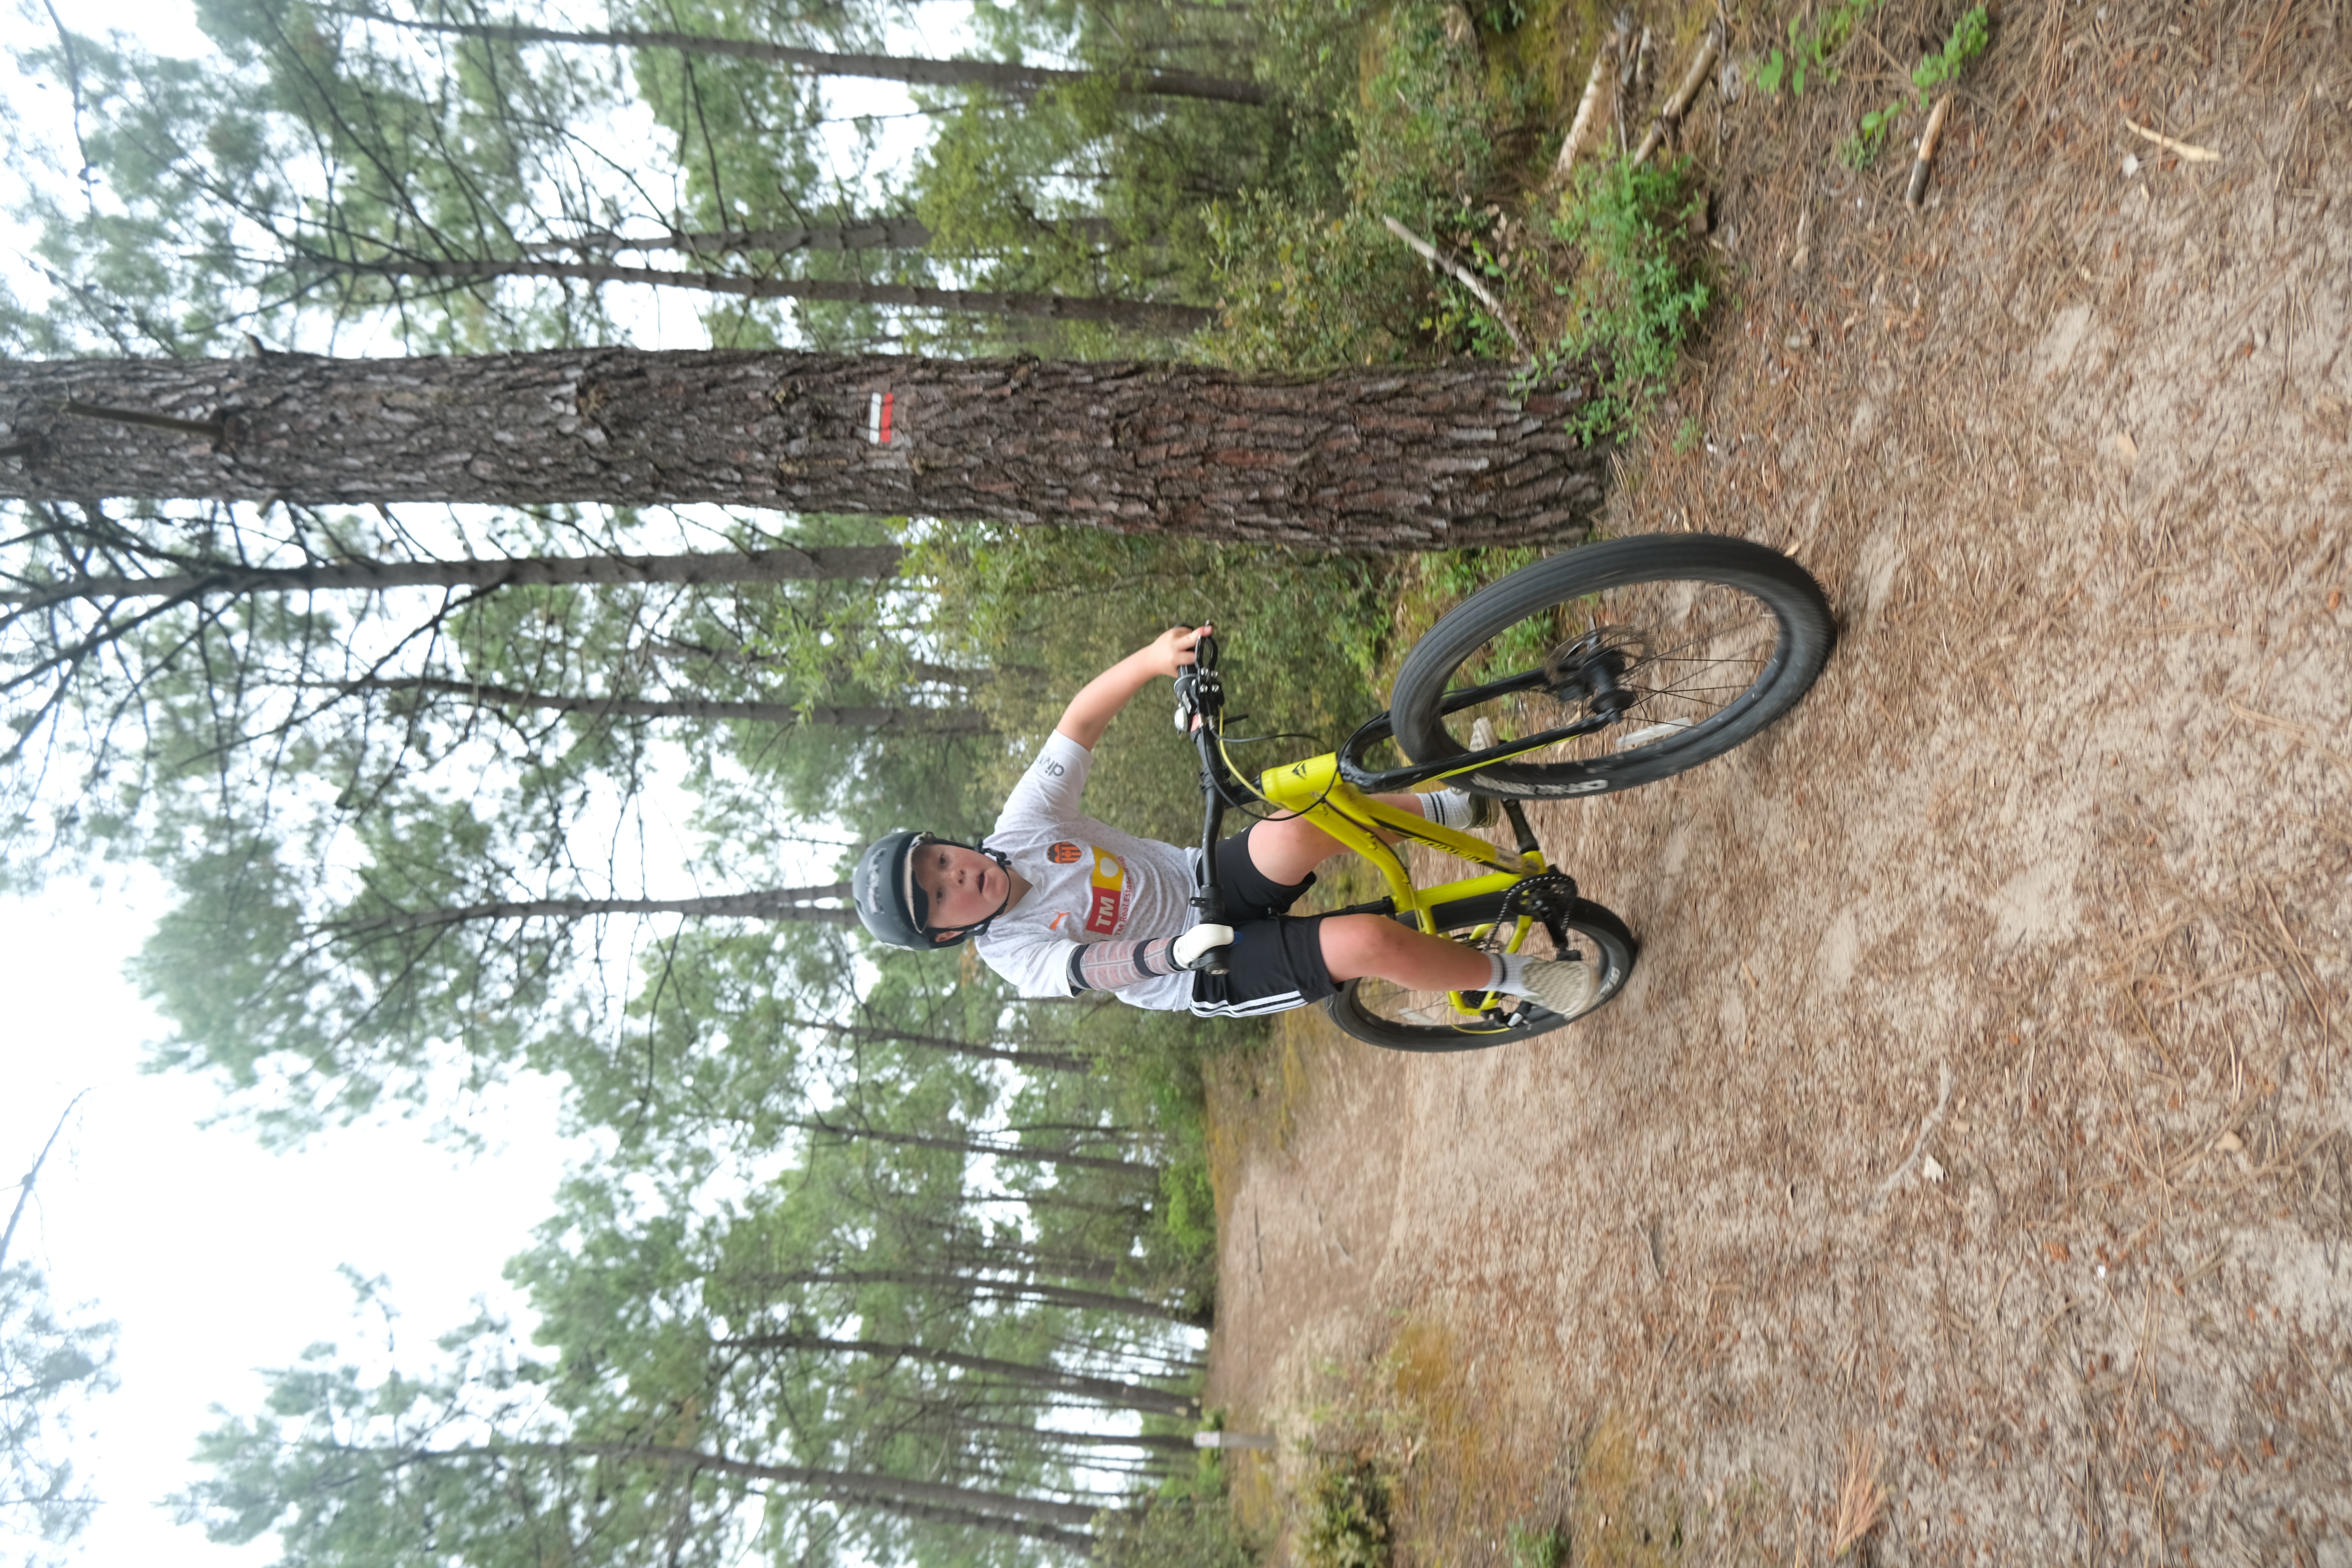 Freddie Tarr on a mountain bike while using a Koalaa tool to hold the handlebars 